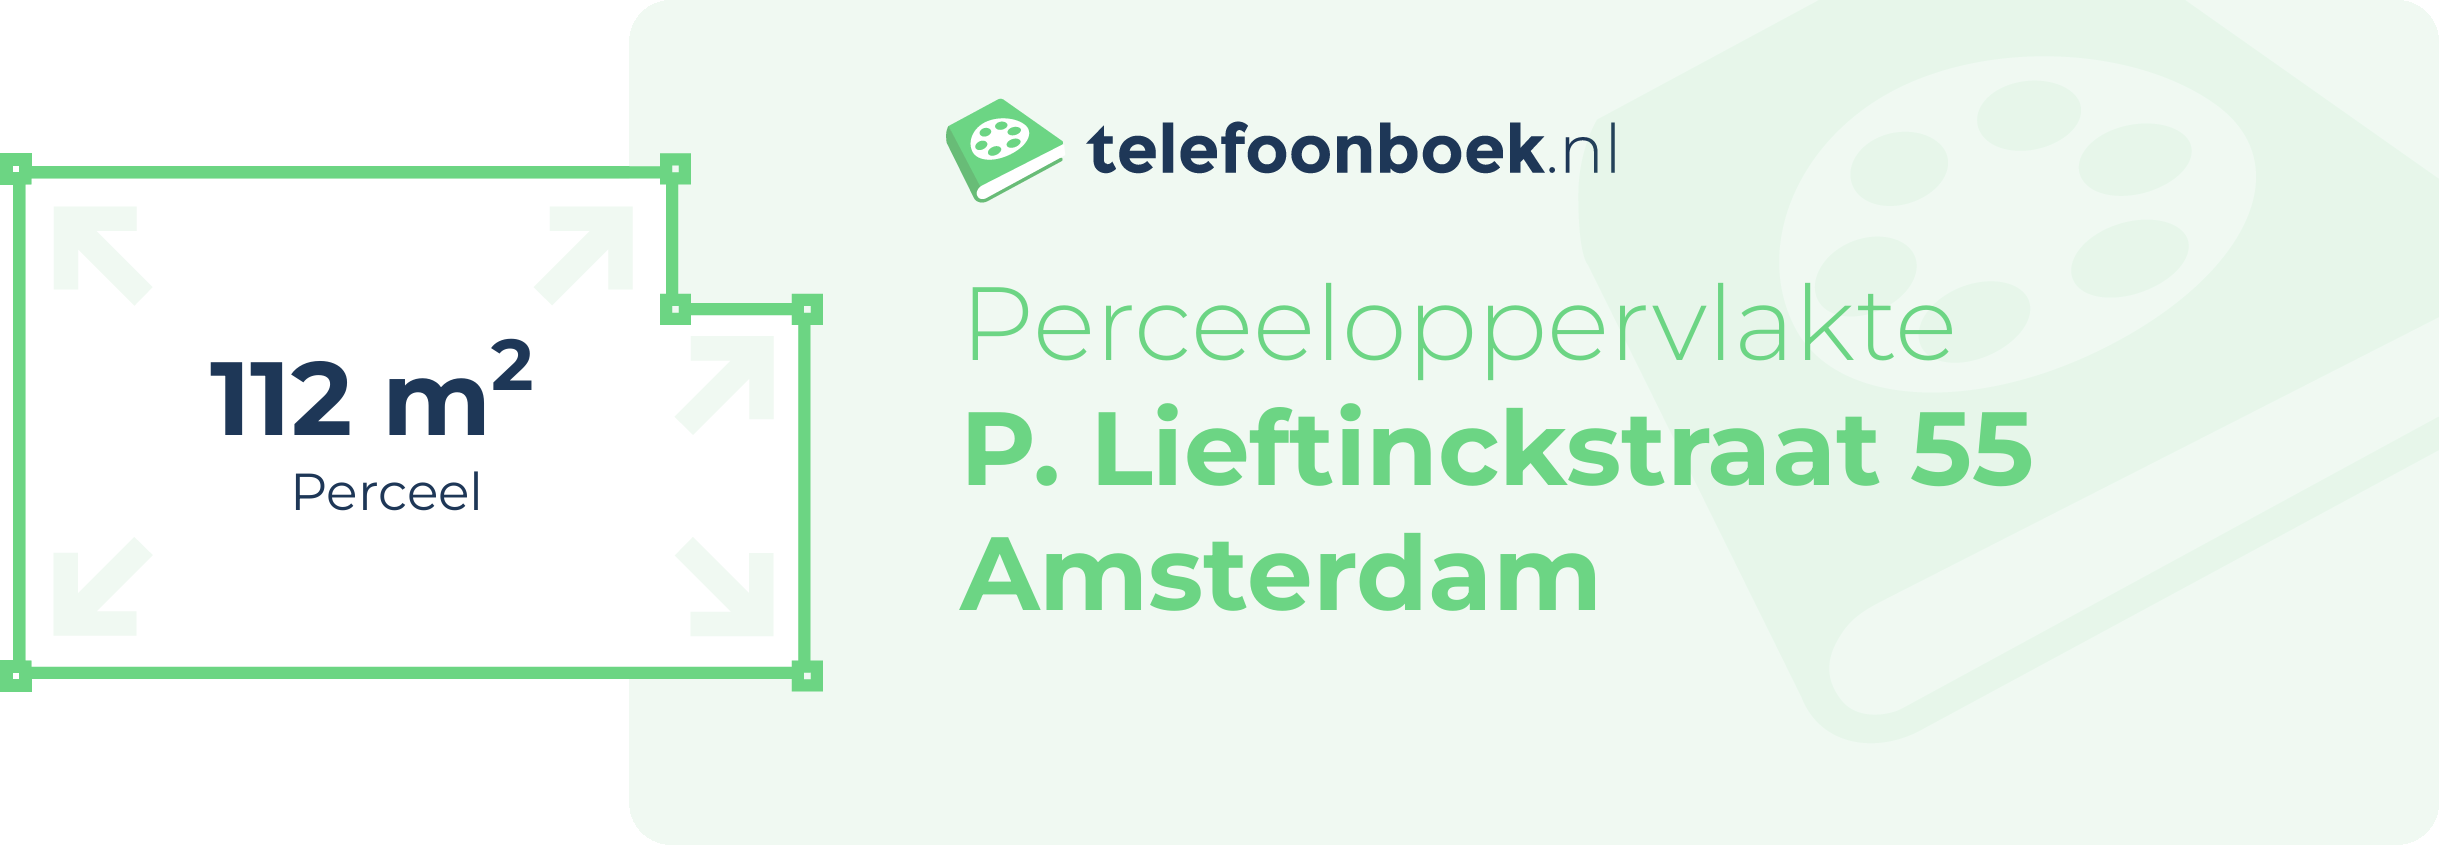 Perceeloppervlakte P. Lieftinckstraat 55 Amsterdam